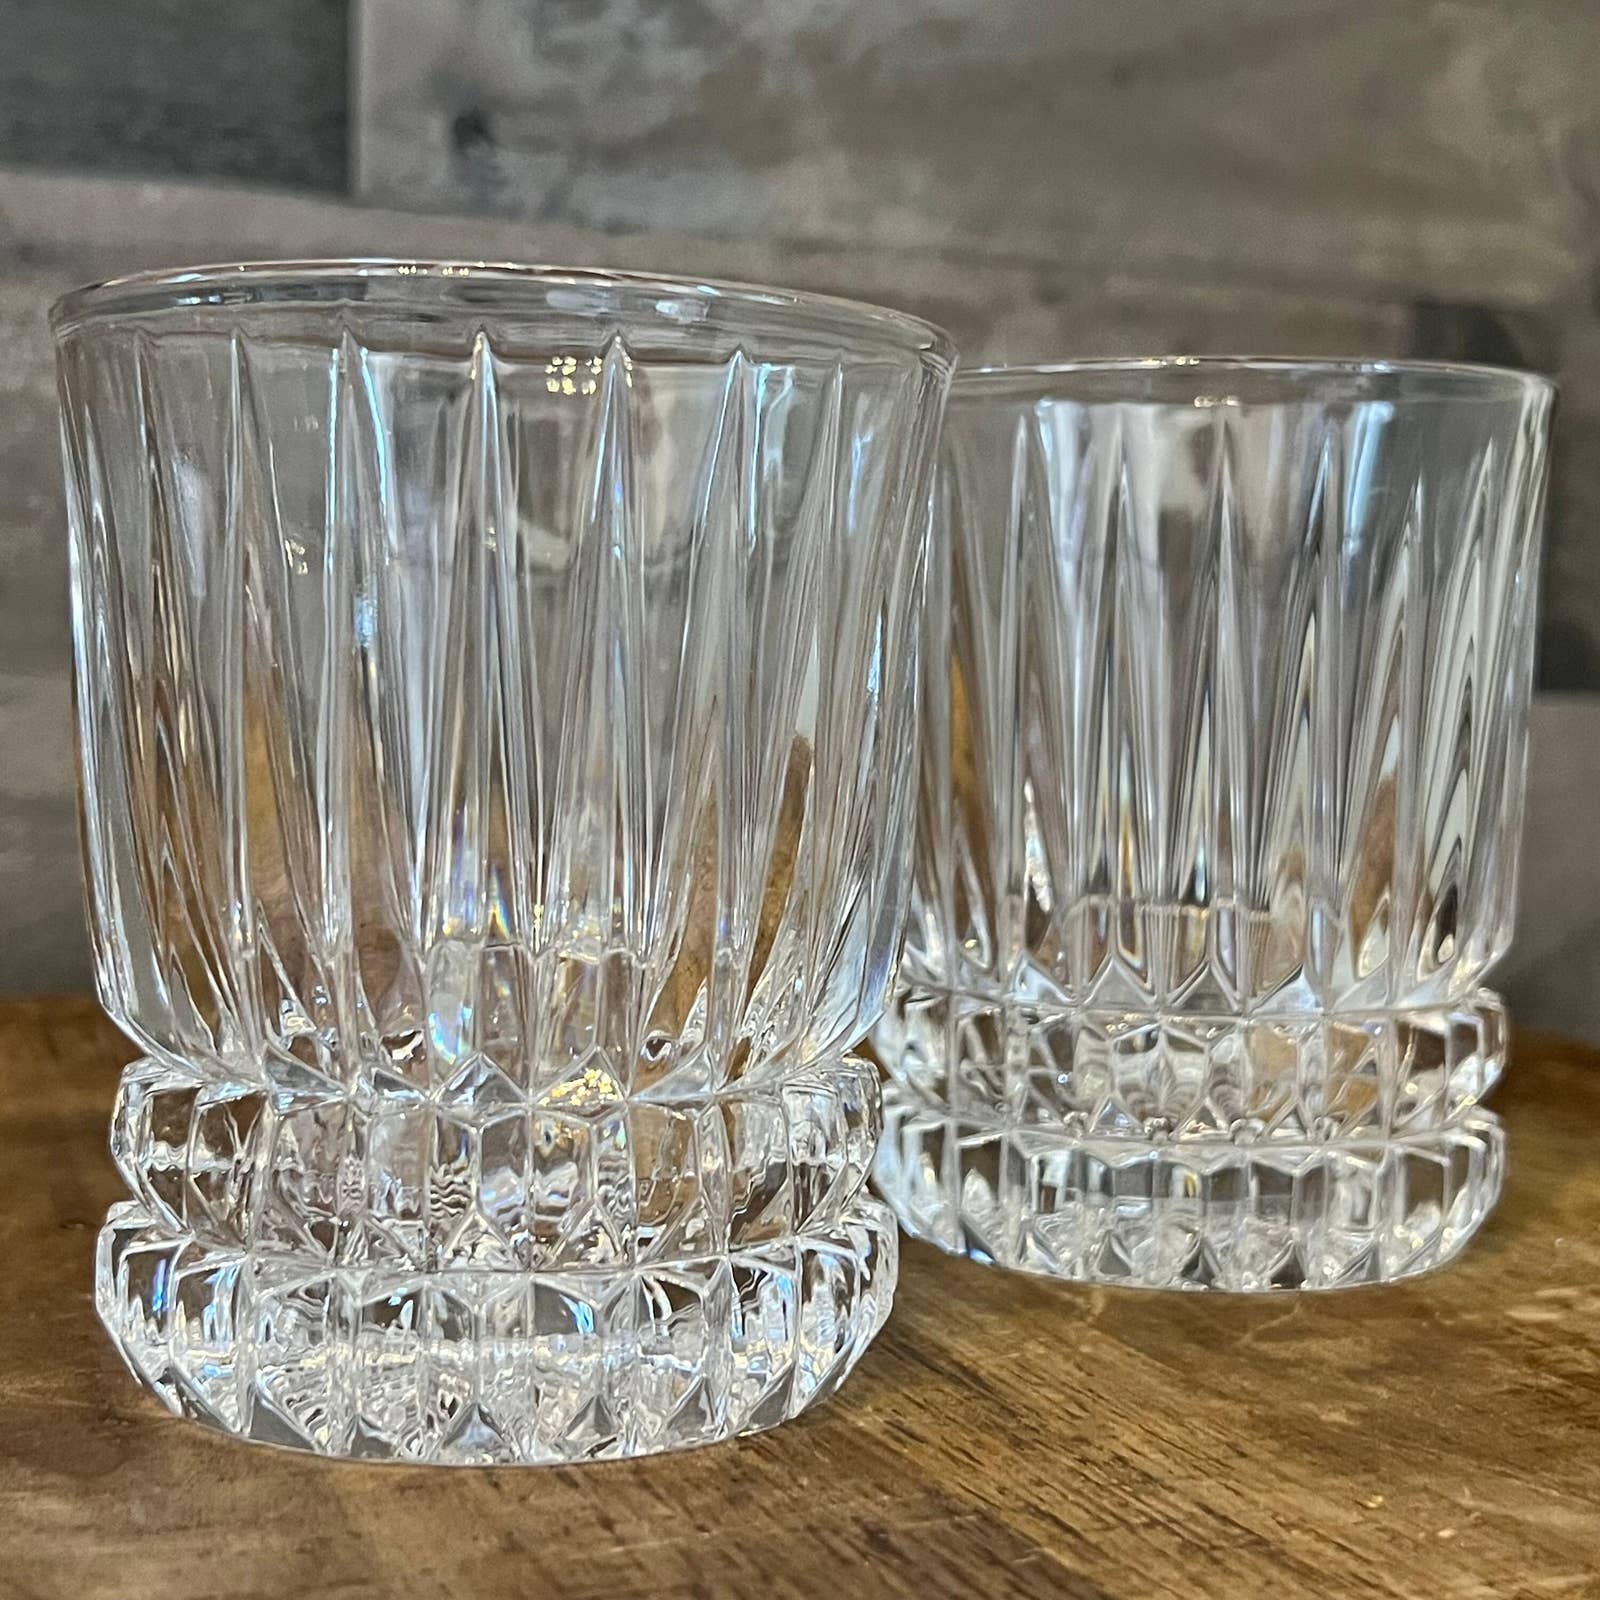 Fostoria heritage clear crystal highball glasses - set of 4